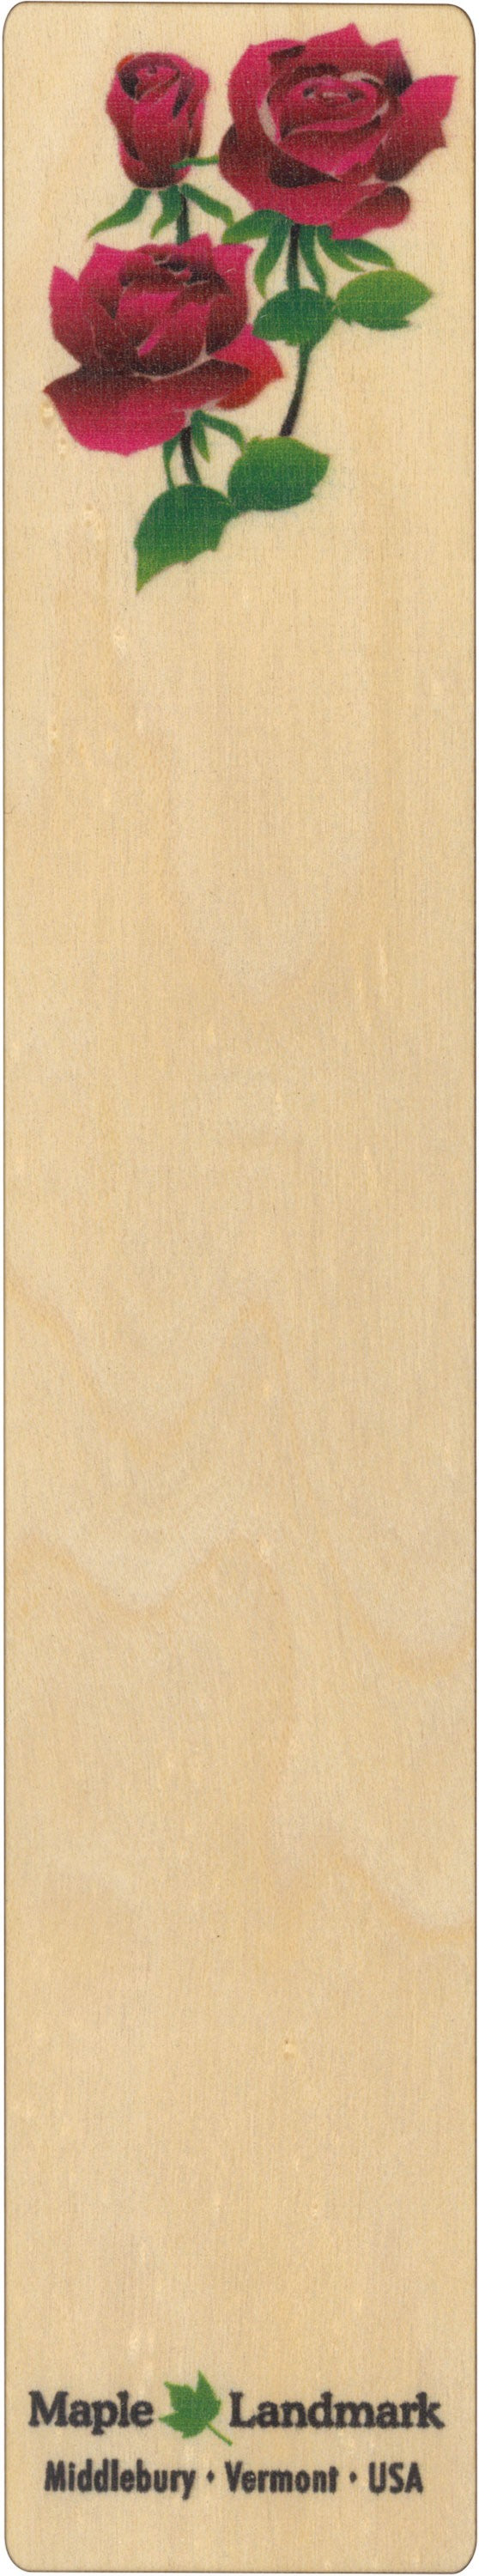 Rose Wooden Bookmark